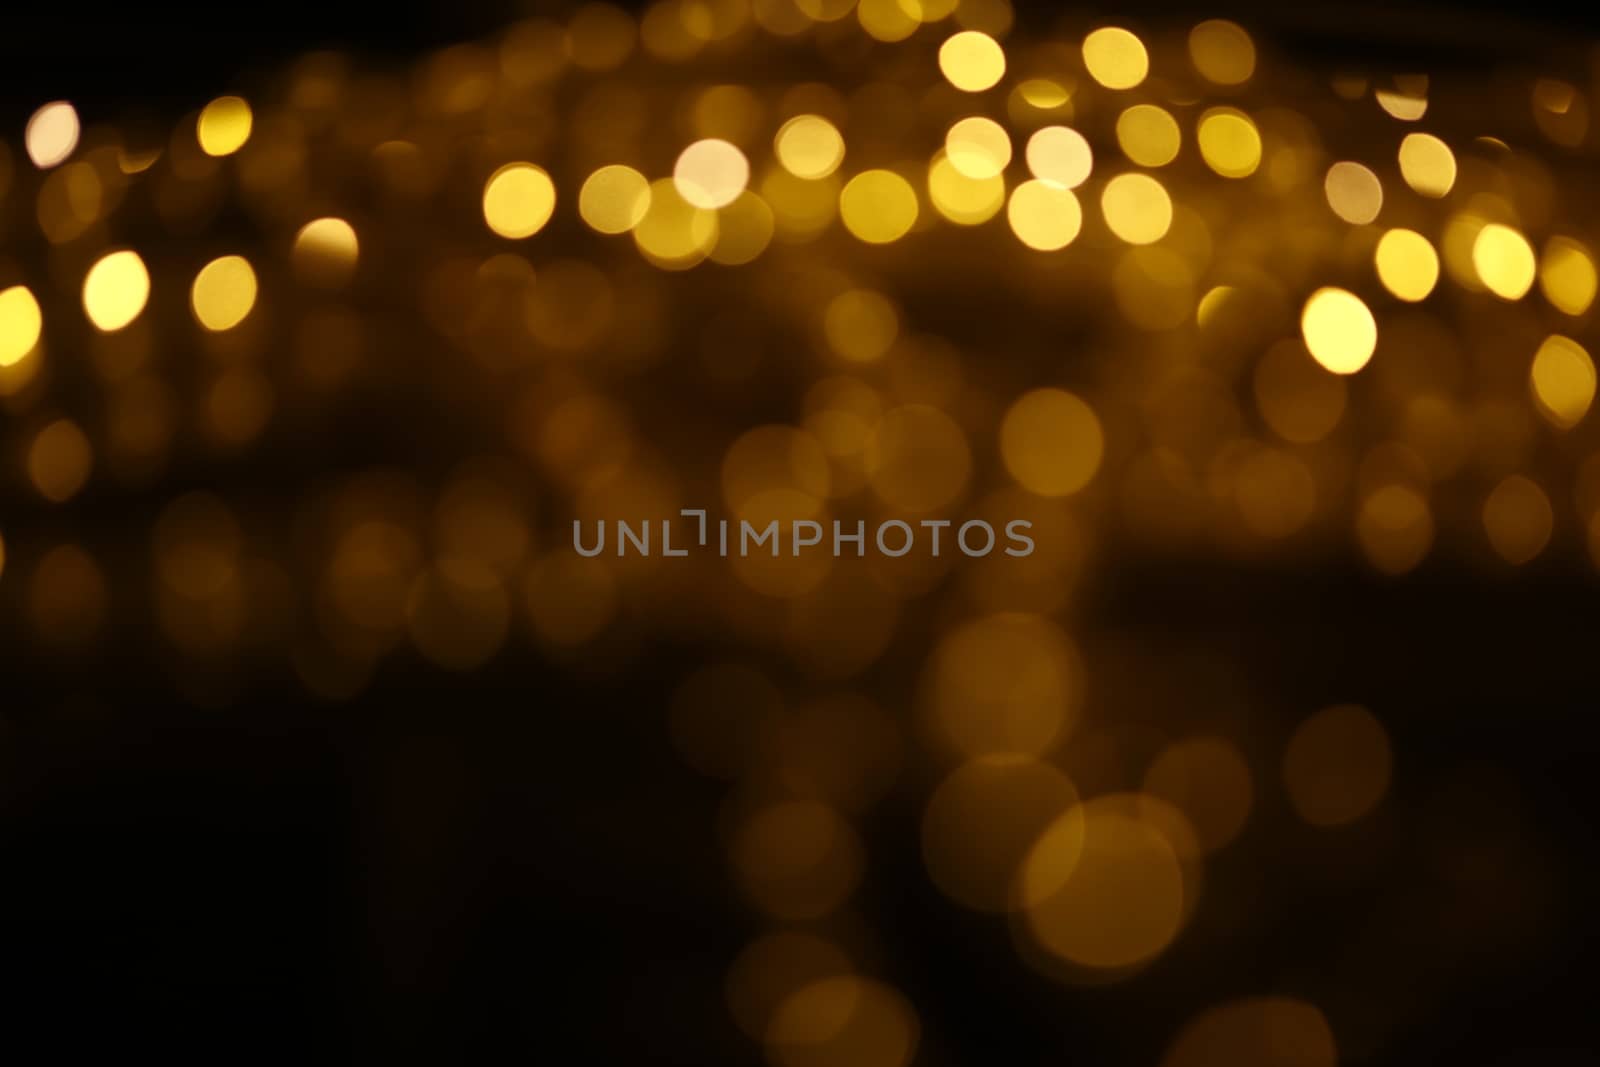 Abstract Blur lights background by rajastills